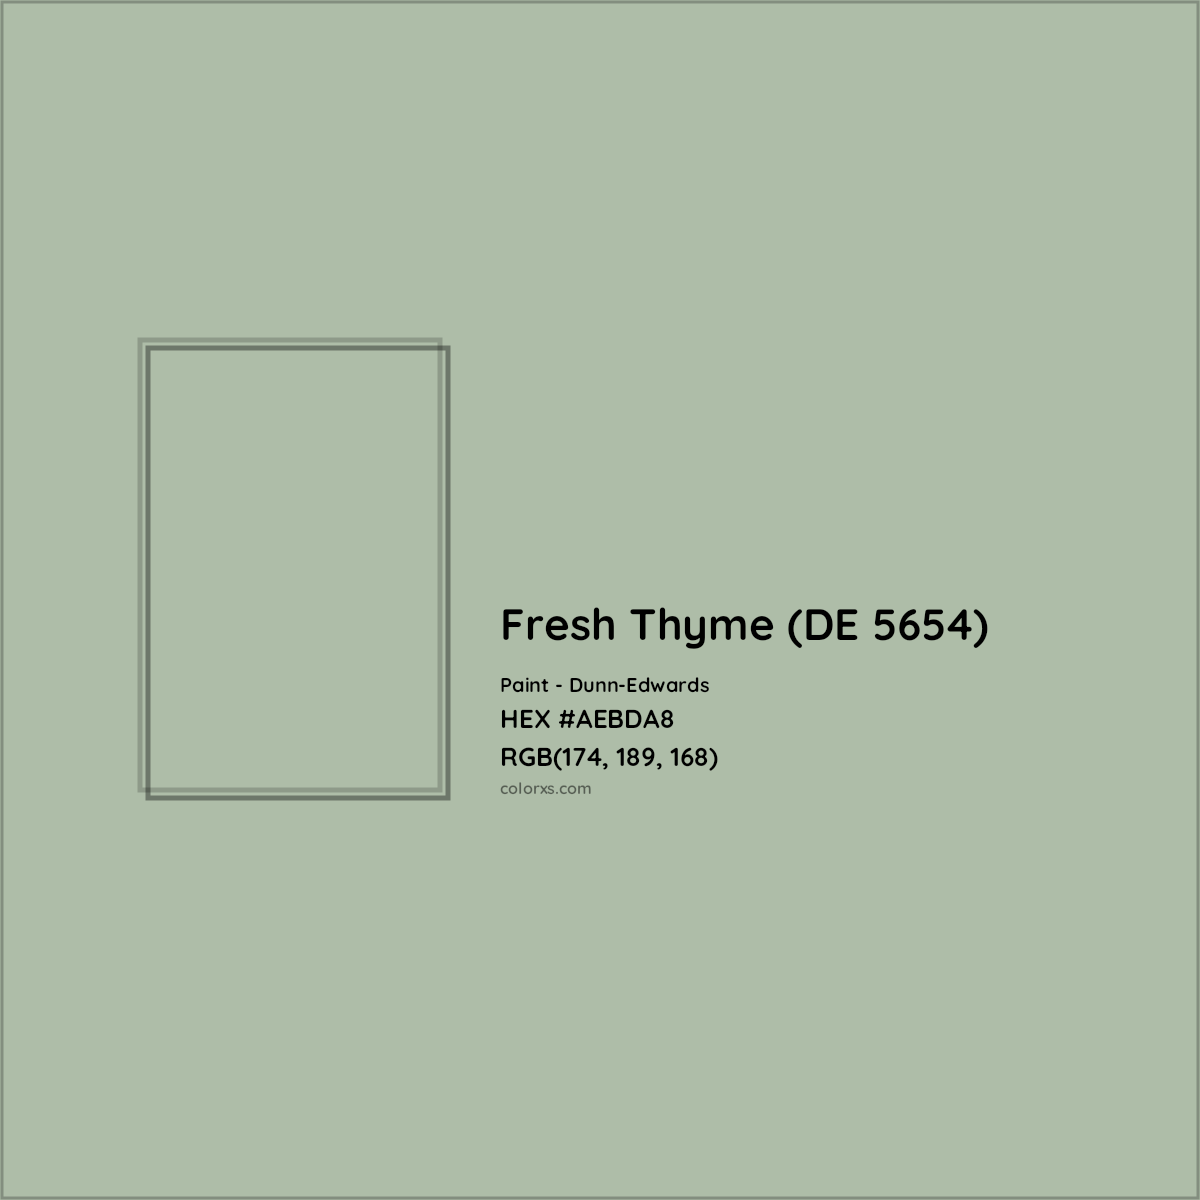 HEX #AEBDA8 Fresh Thyme (DE 5654) Paint Dunn-Edwards - Color Code